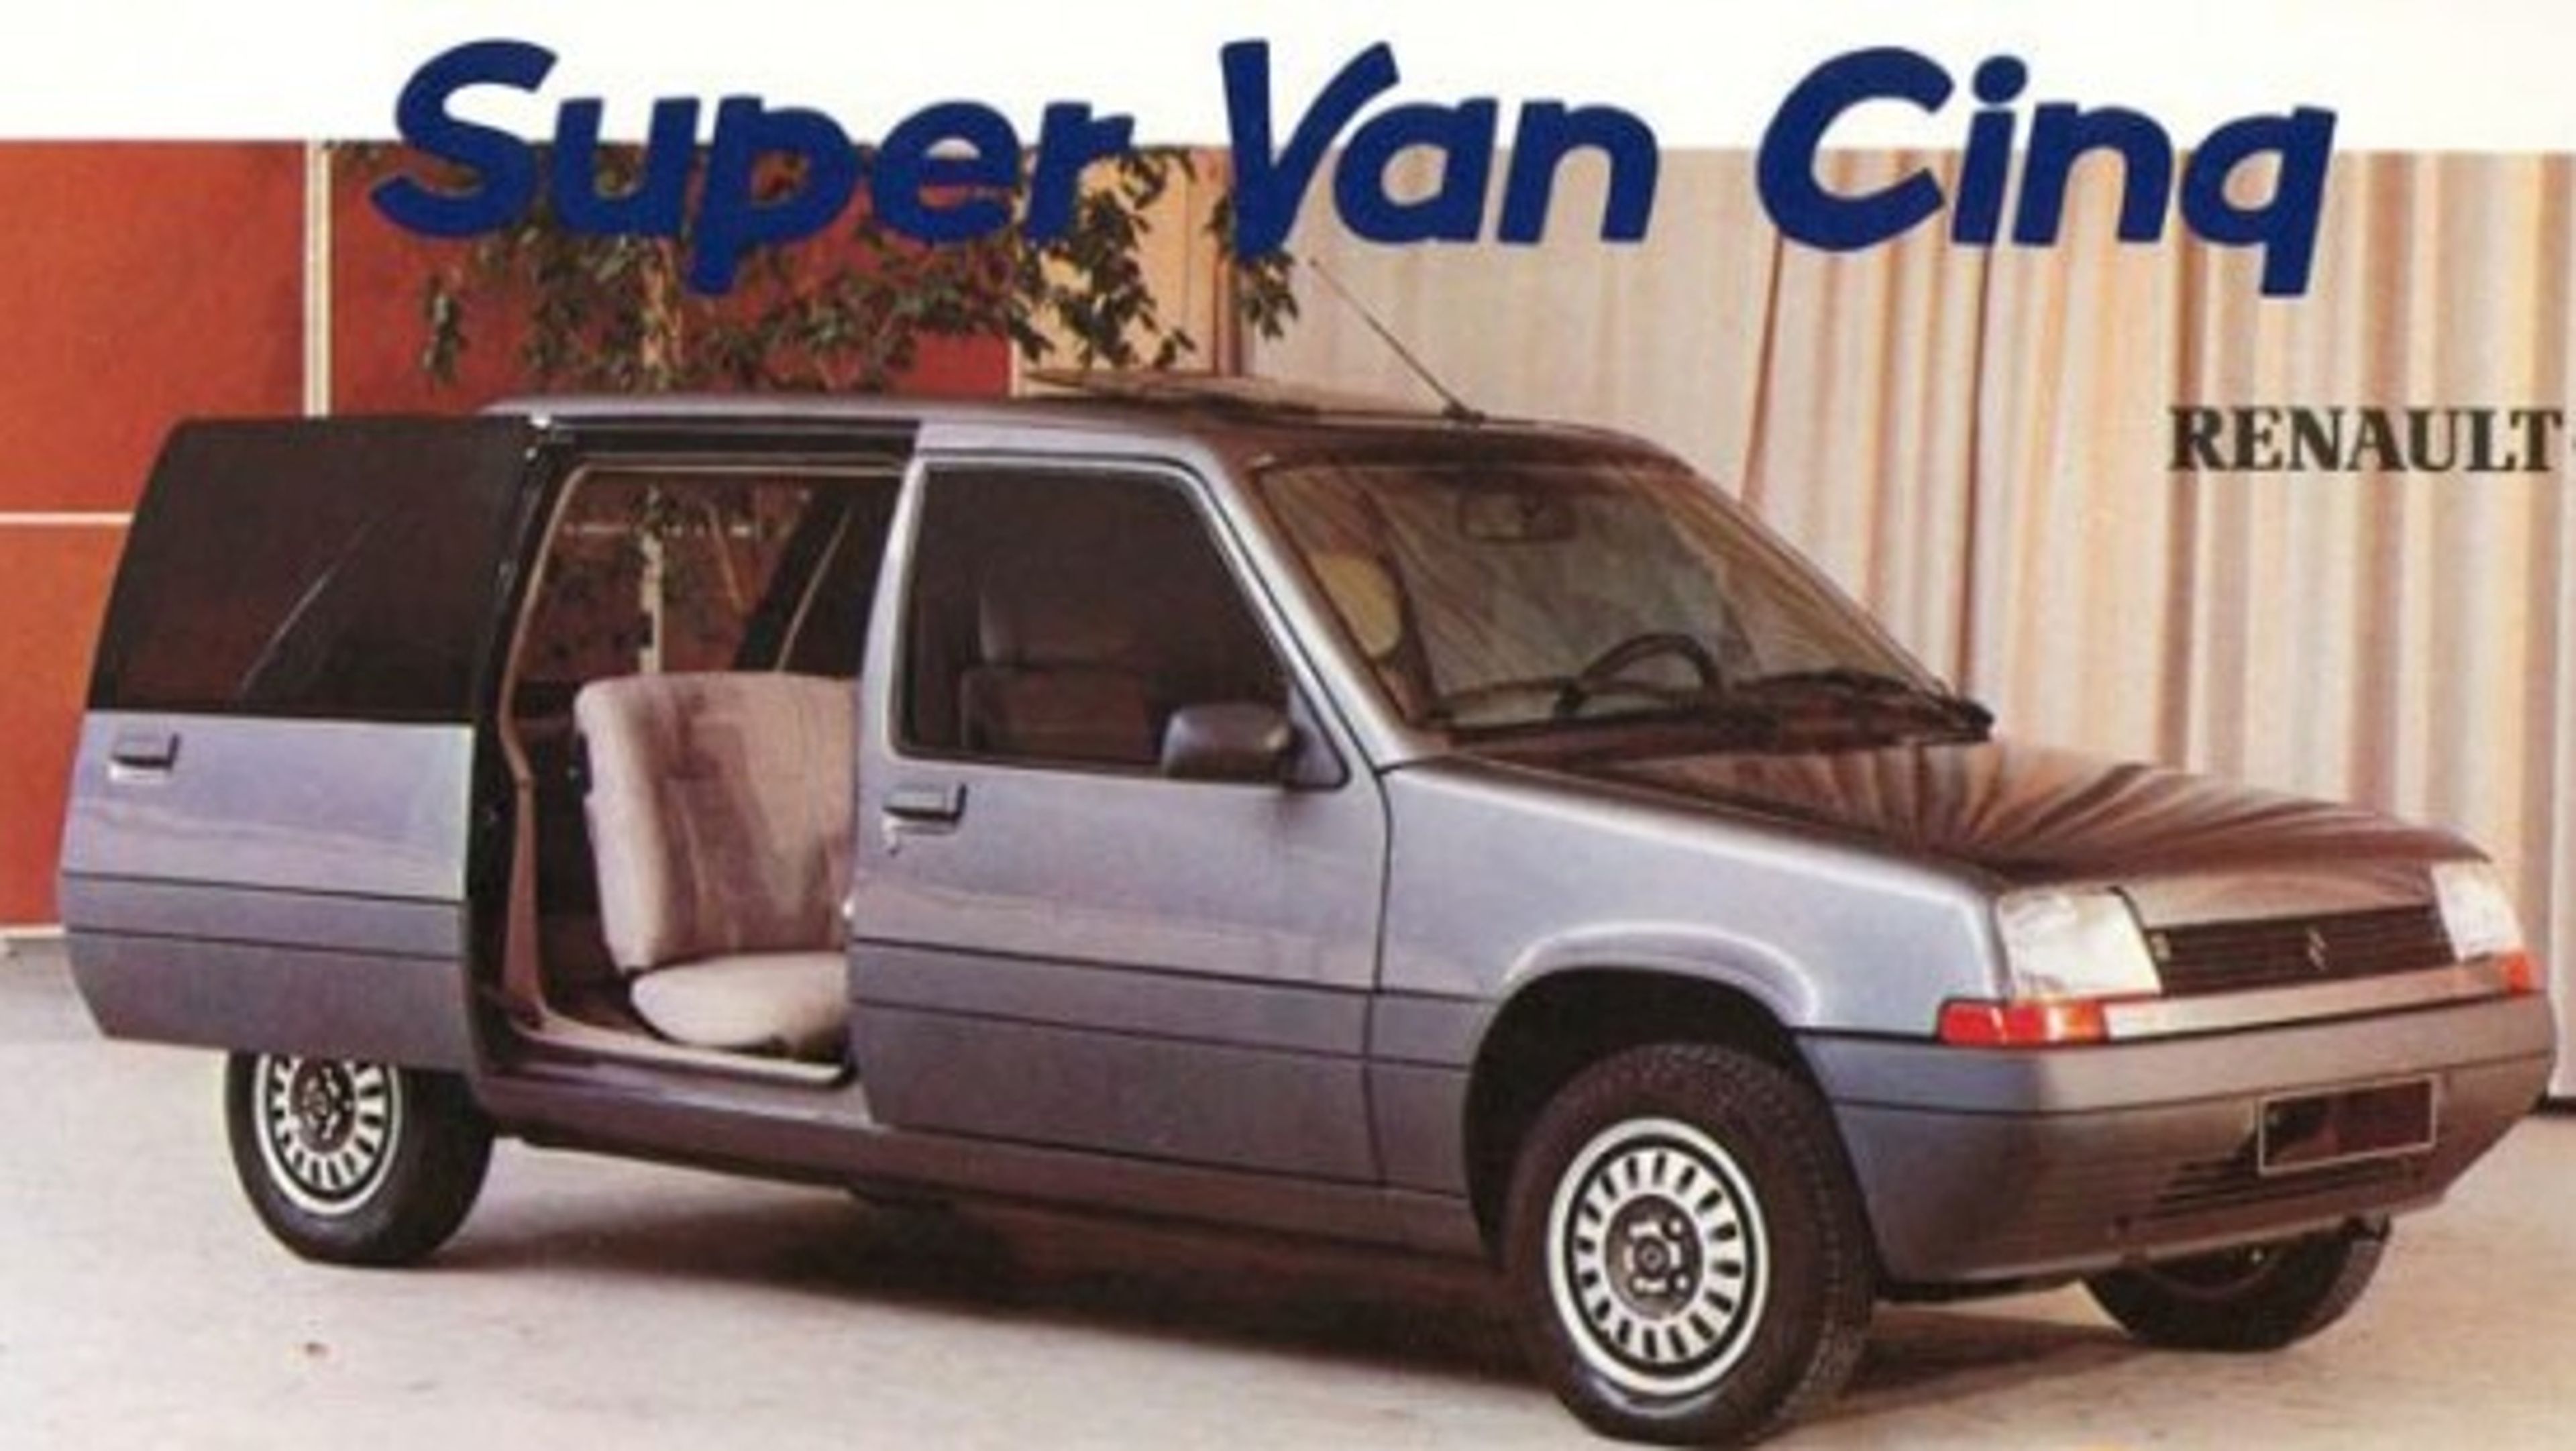 Publicidad del Renault Super Van Cinq